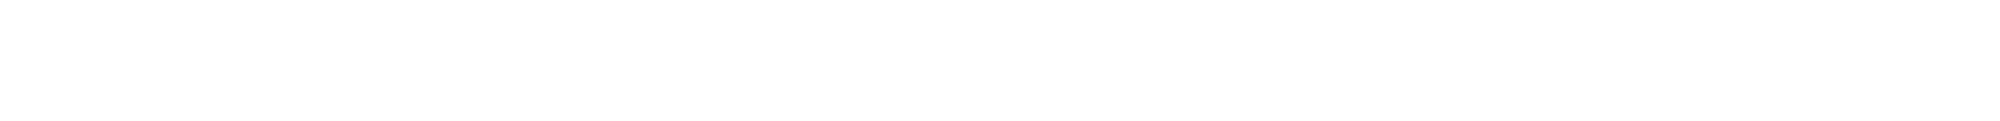 Flydesk-espace-logo